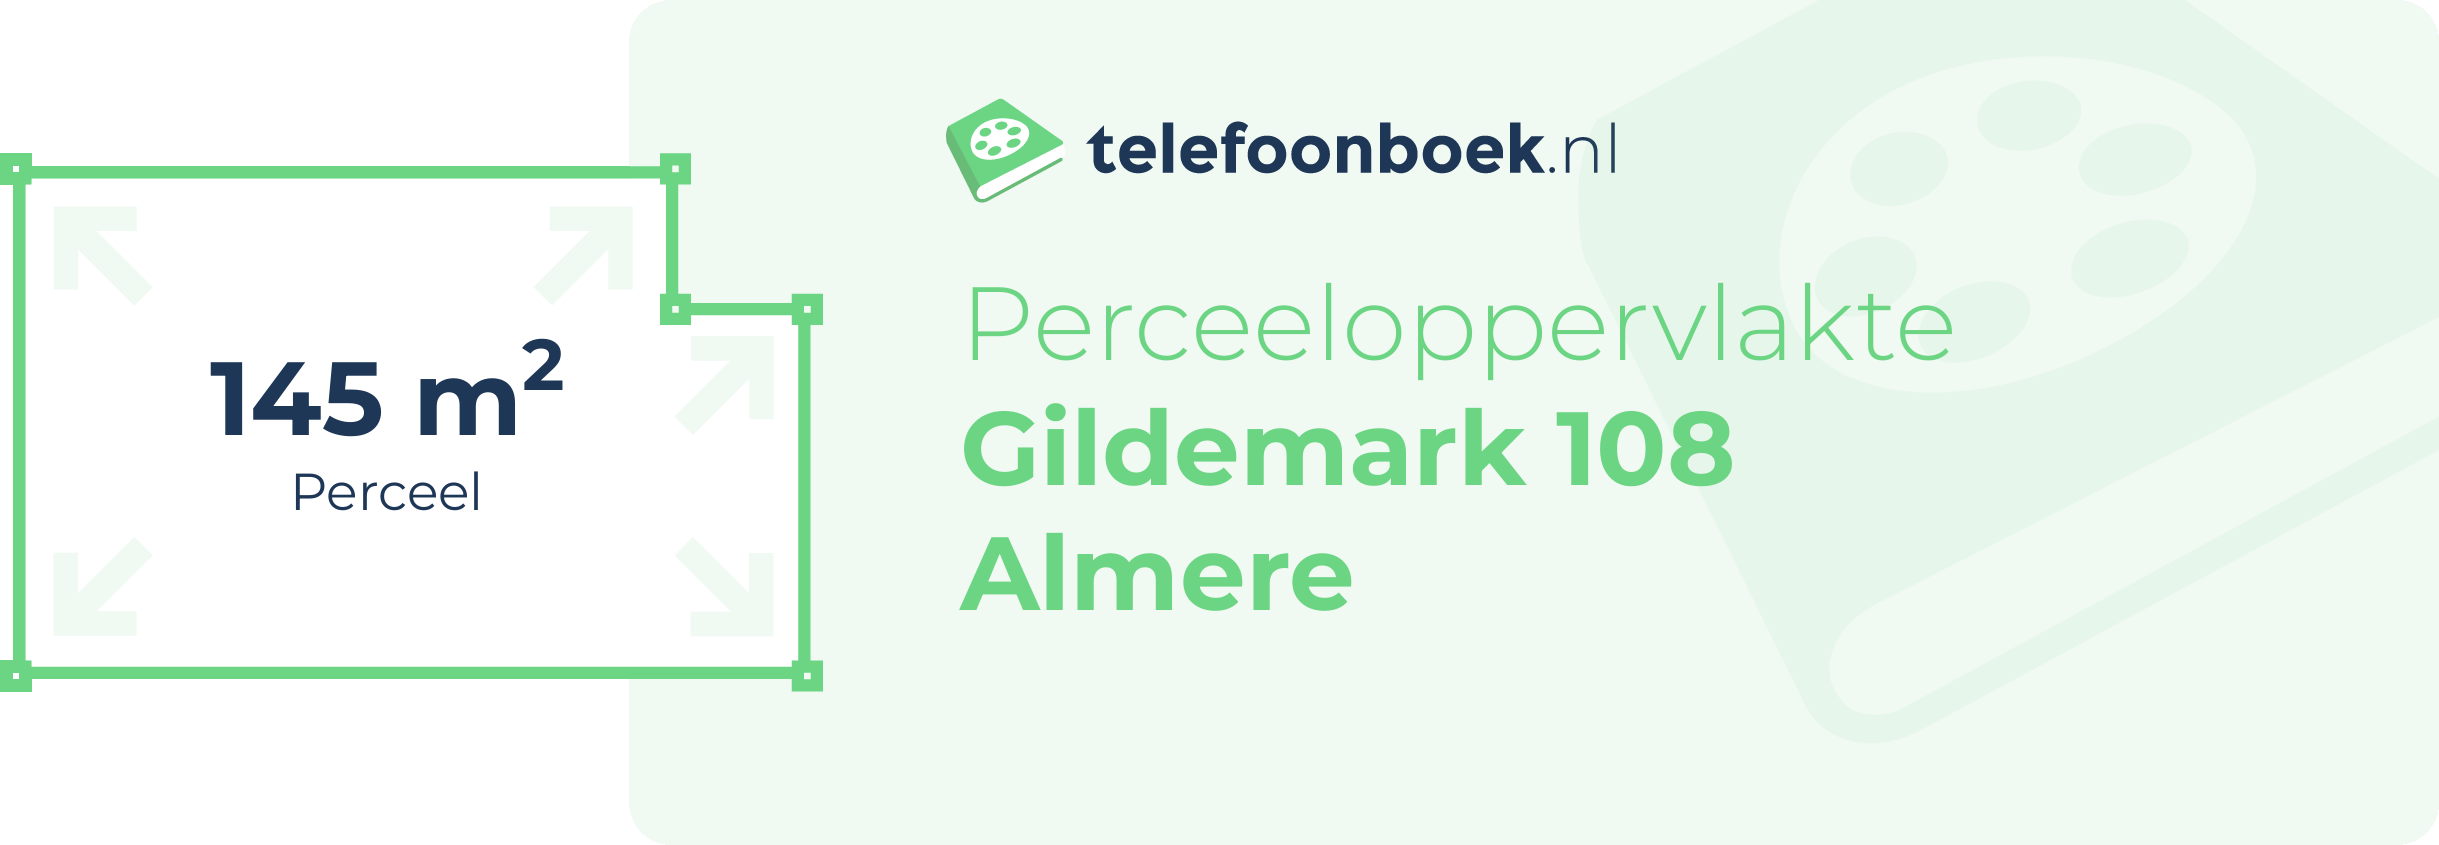 Perceeloppervlakte Gildemark 108 Almere